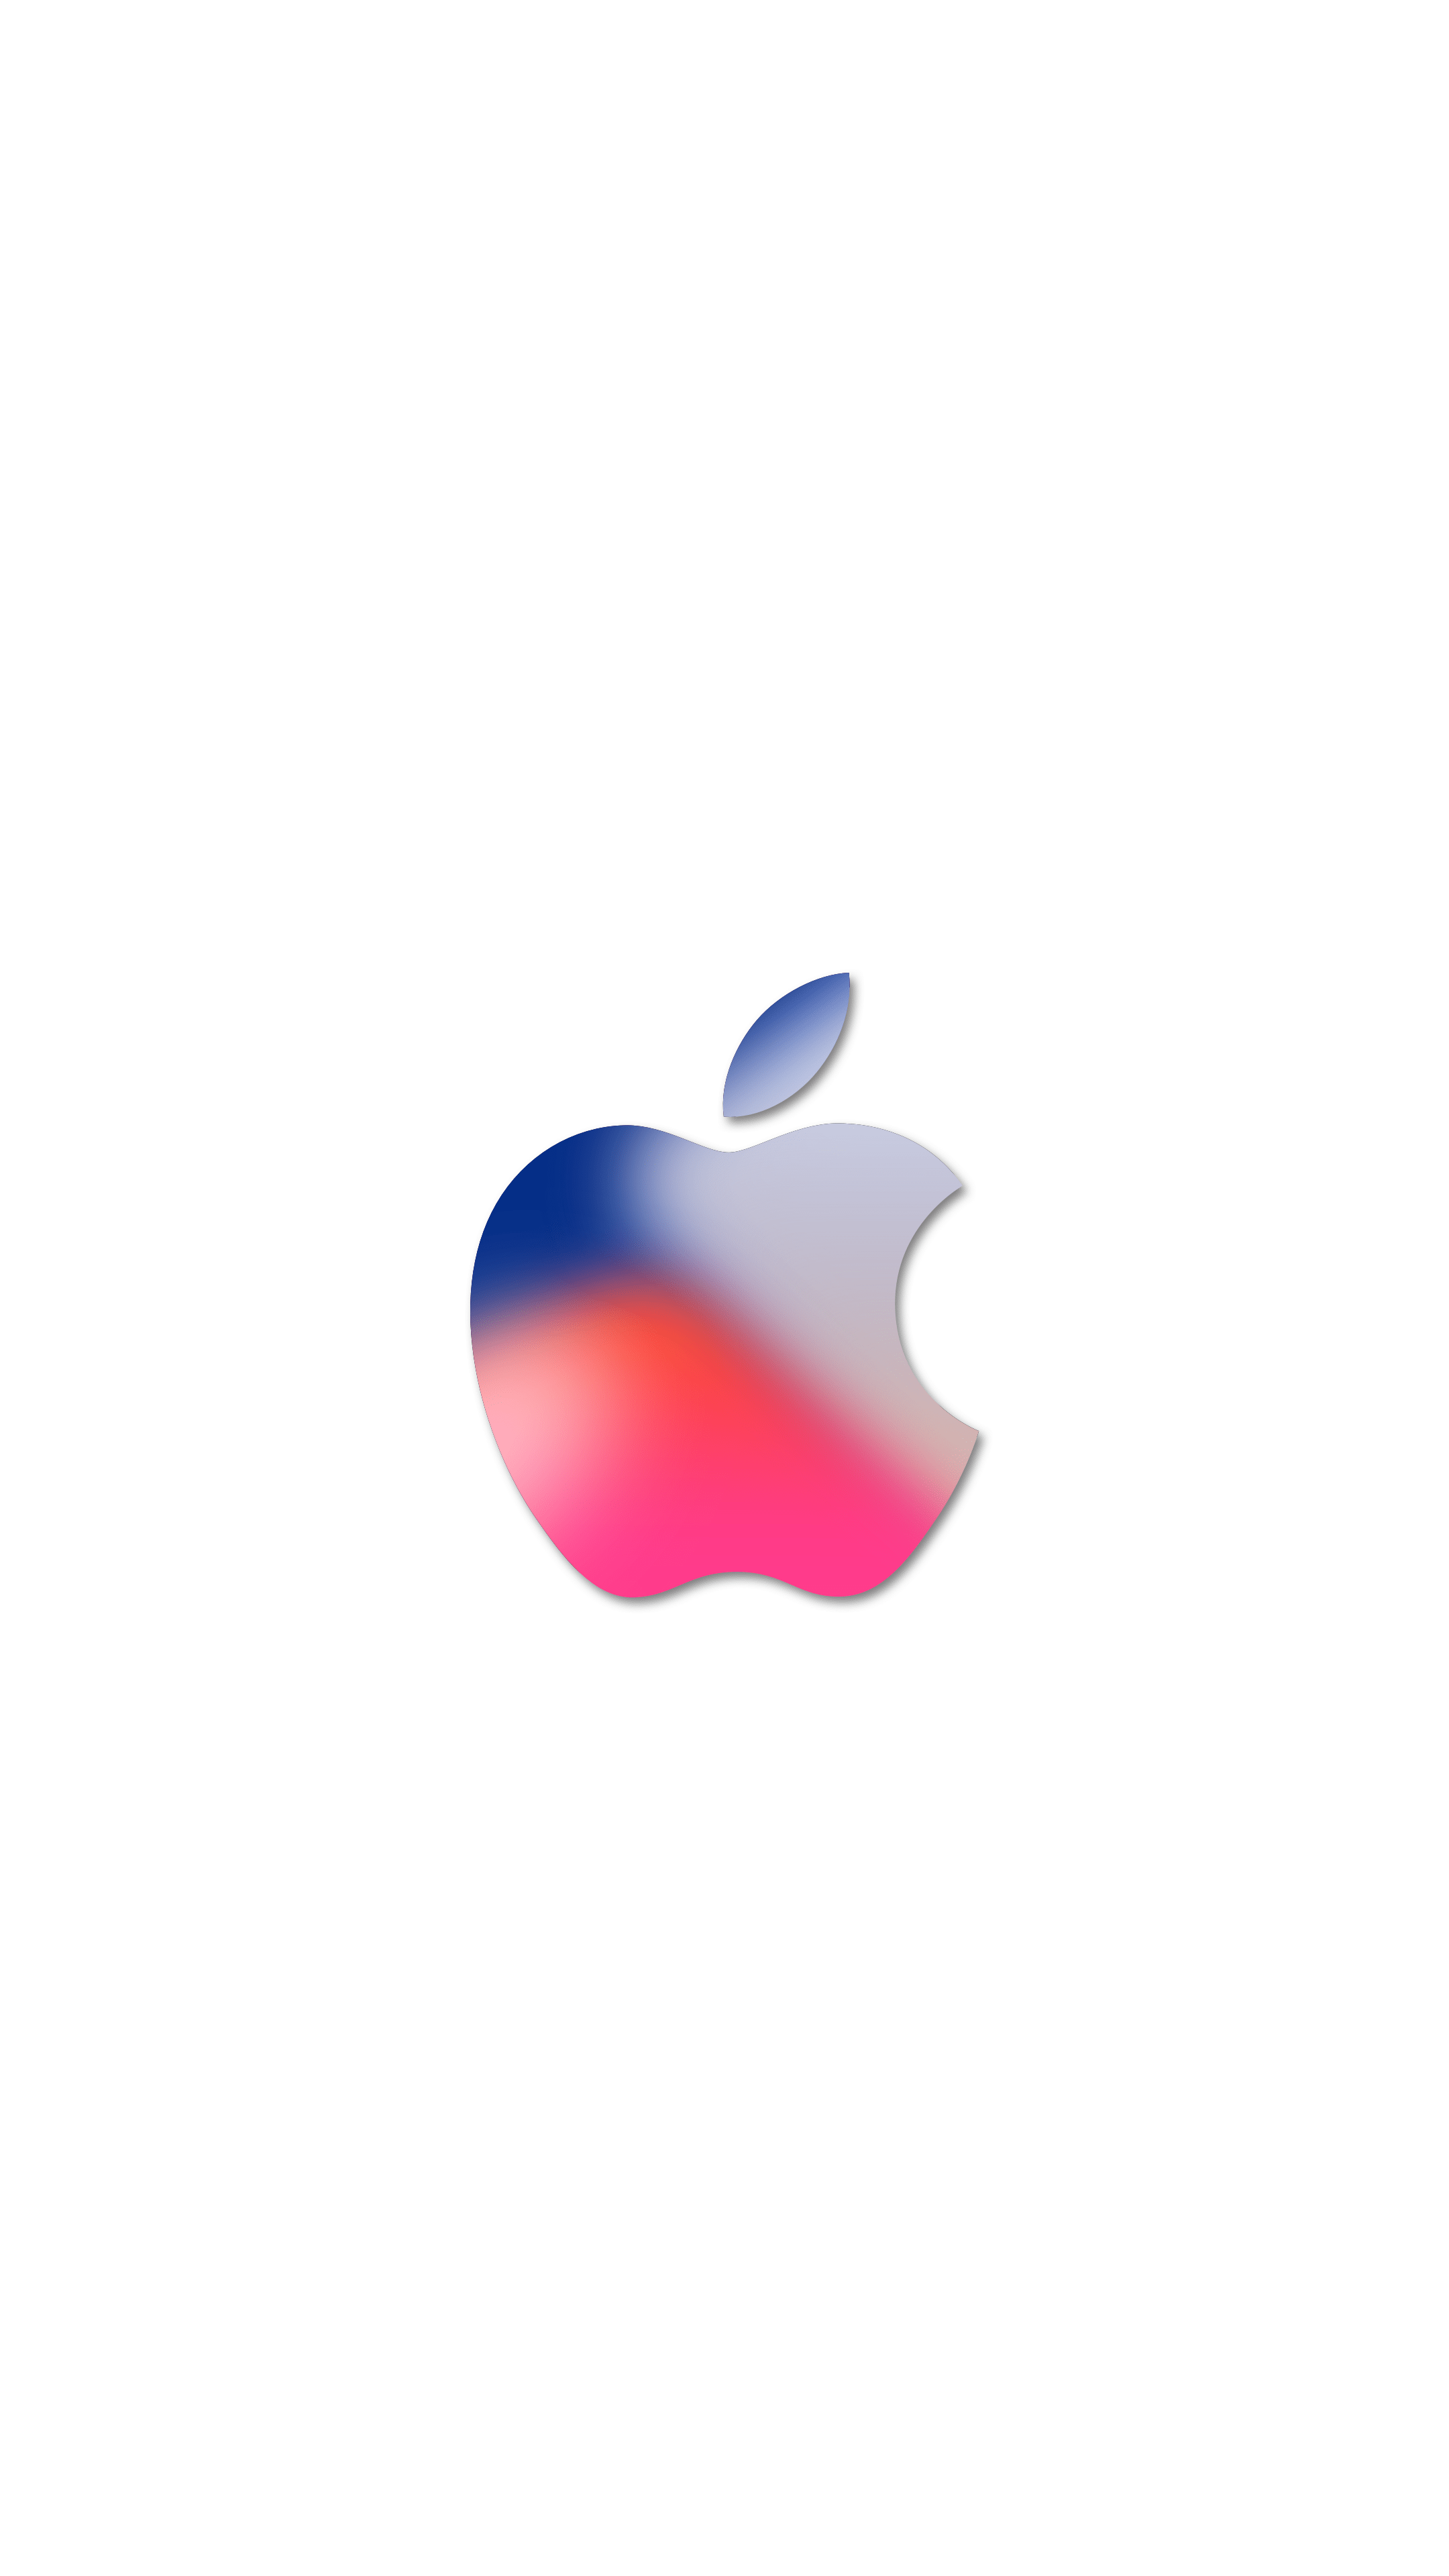 White Apple Logo Wallpapers Top Free White Apple Logo Backgrounds Wallpaperaccess